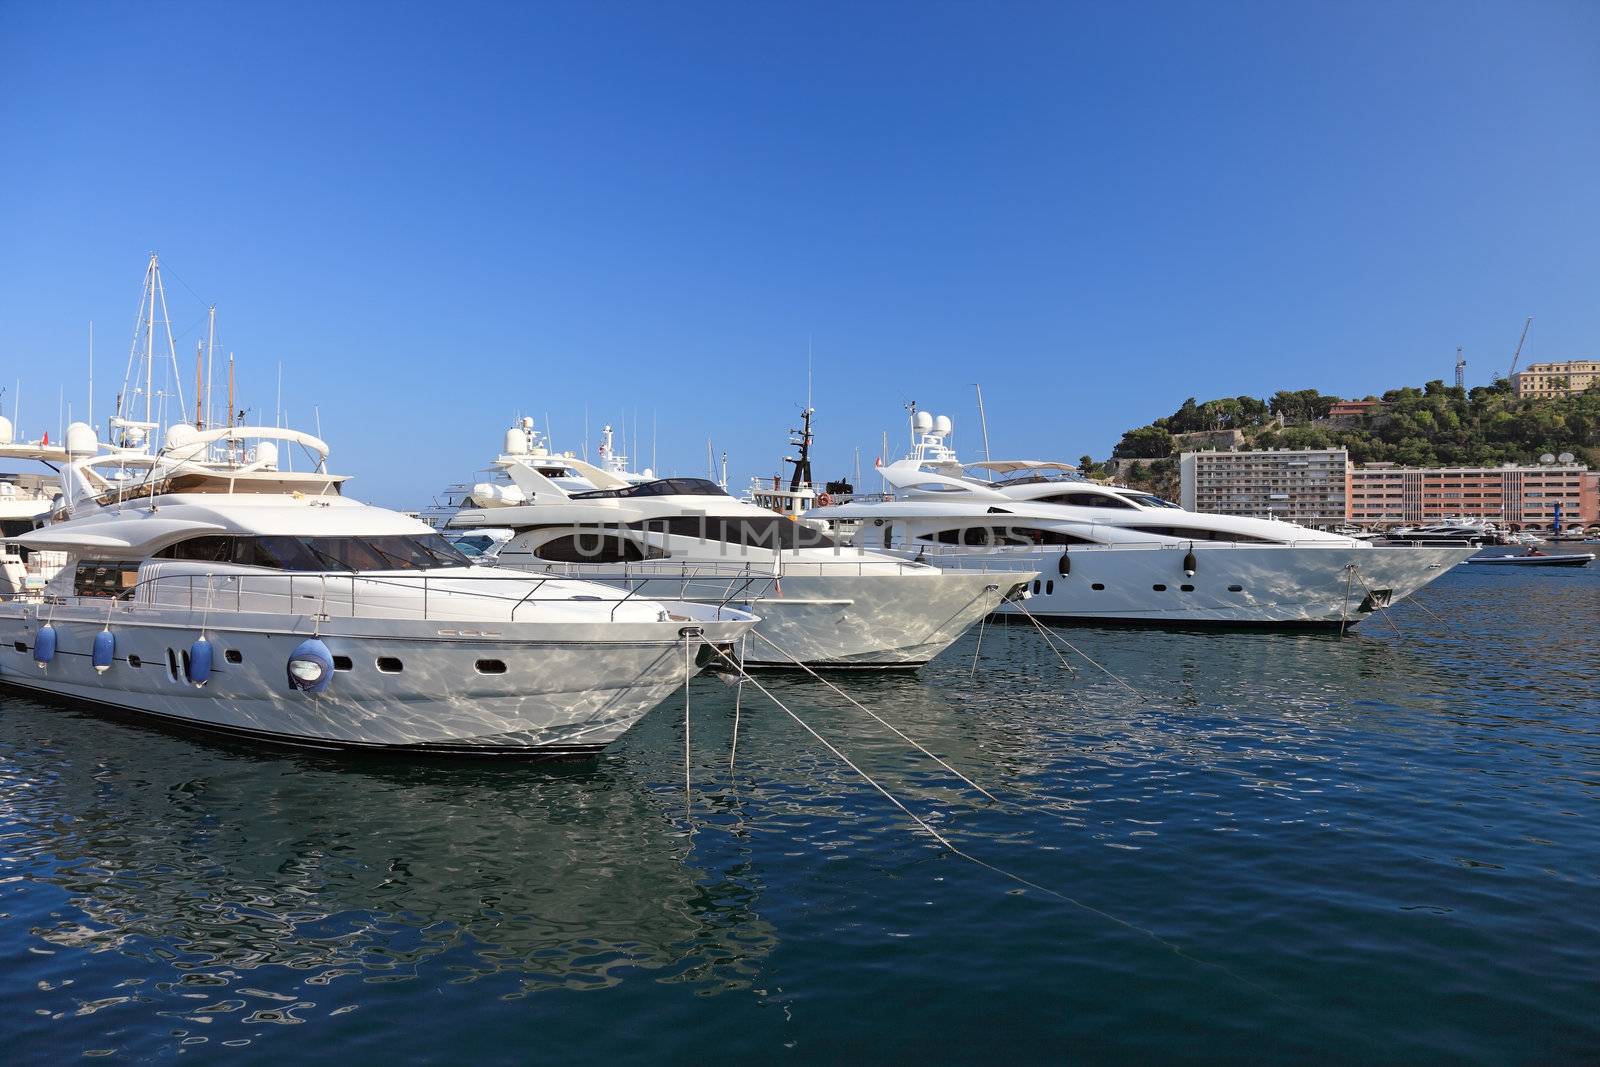 Very expensive luxury yachts in harbor of Monaco principality.